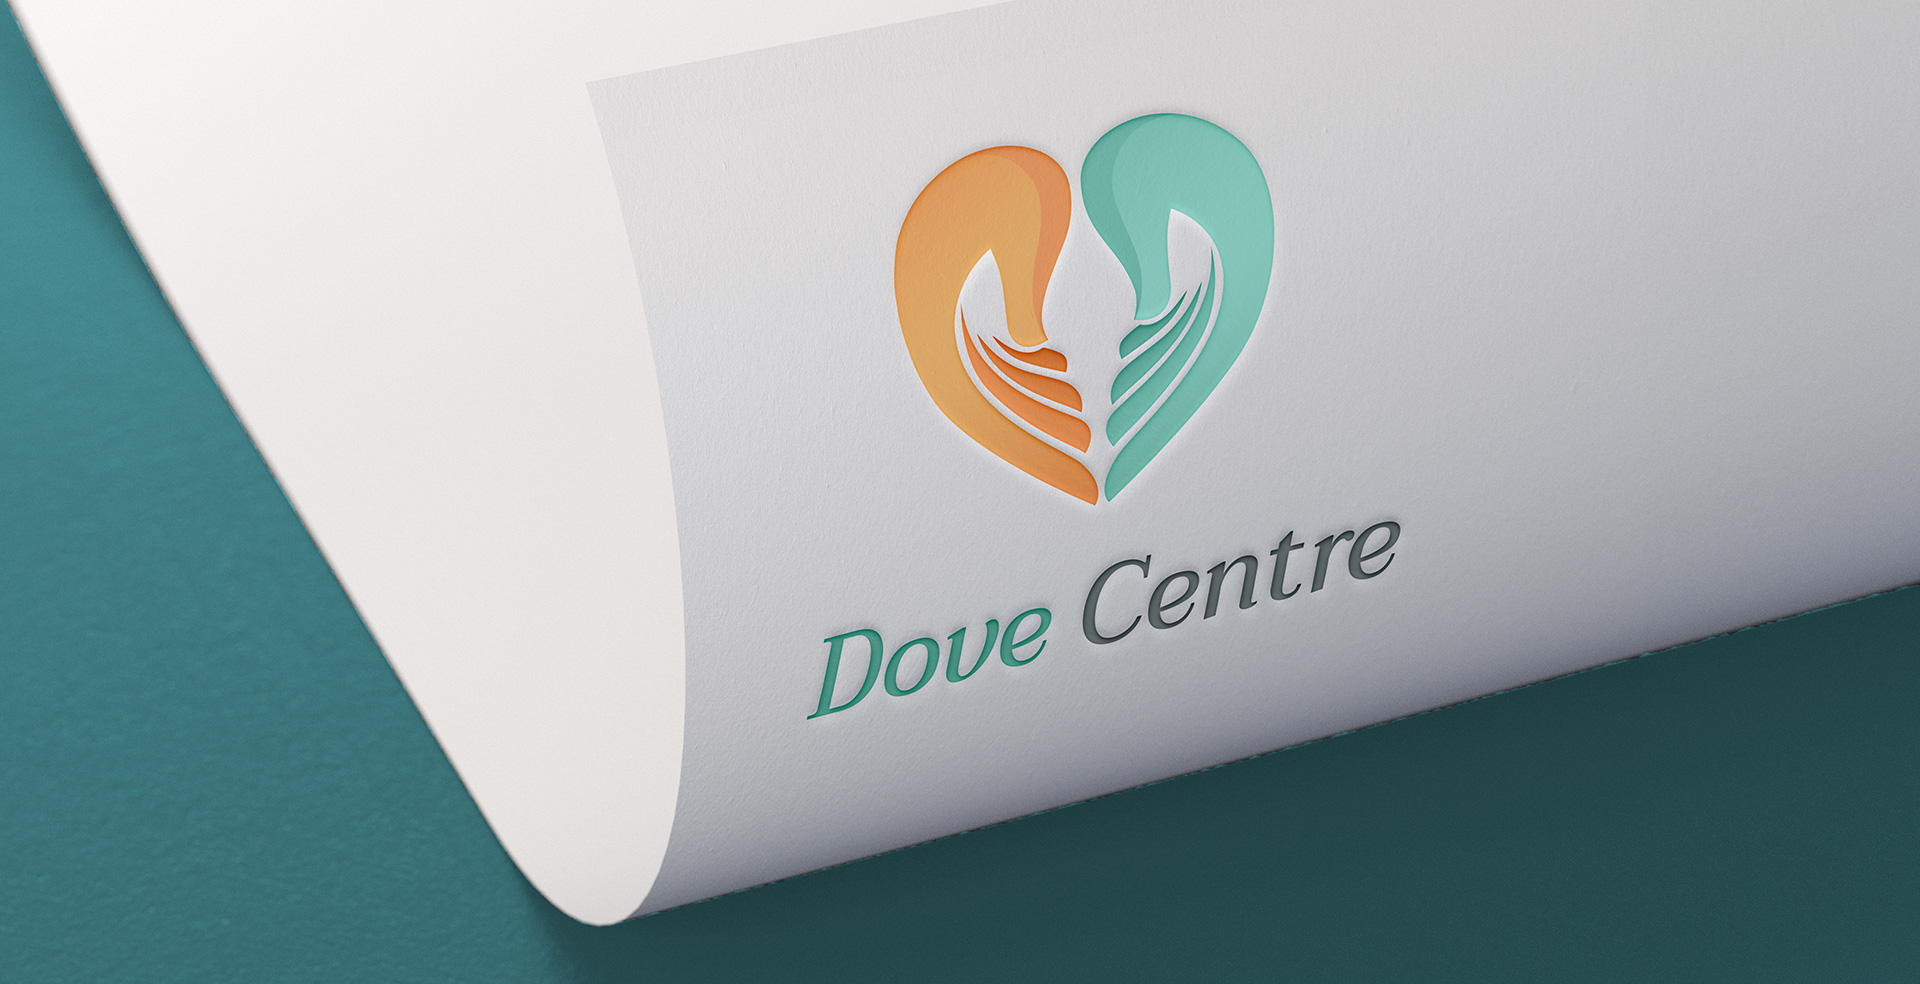 Dove Centre logo2